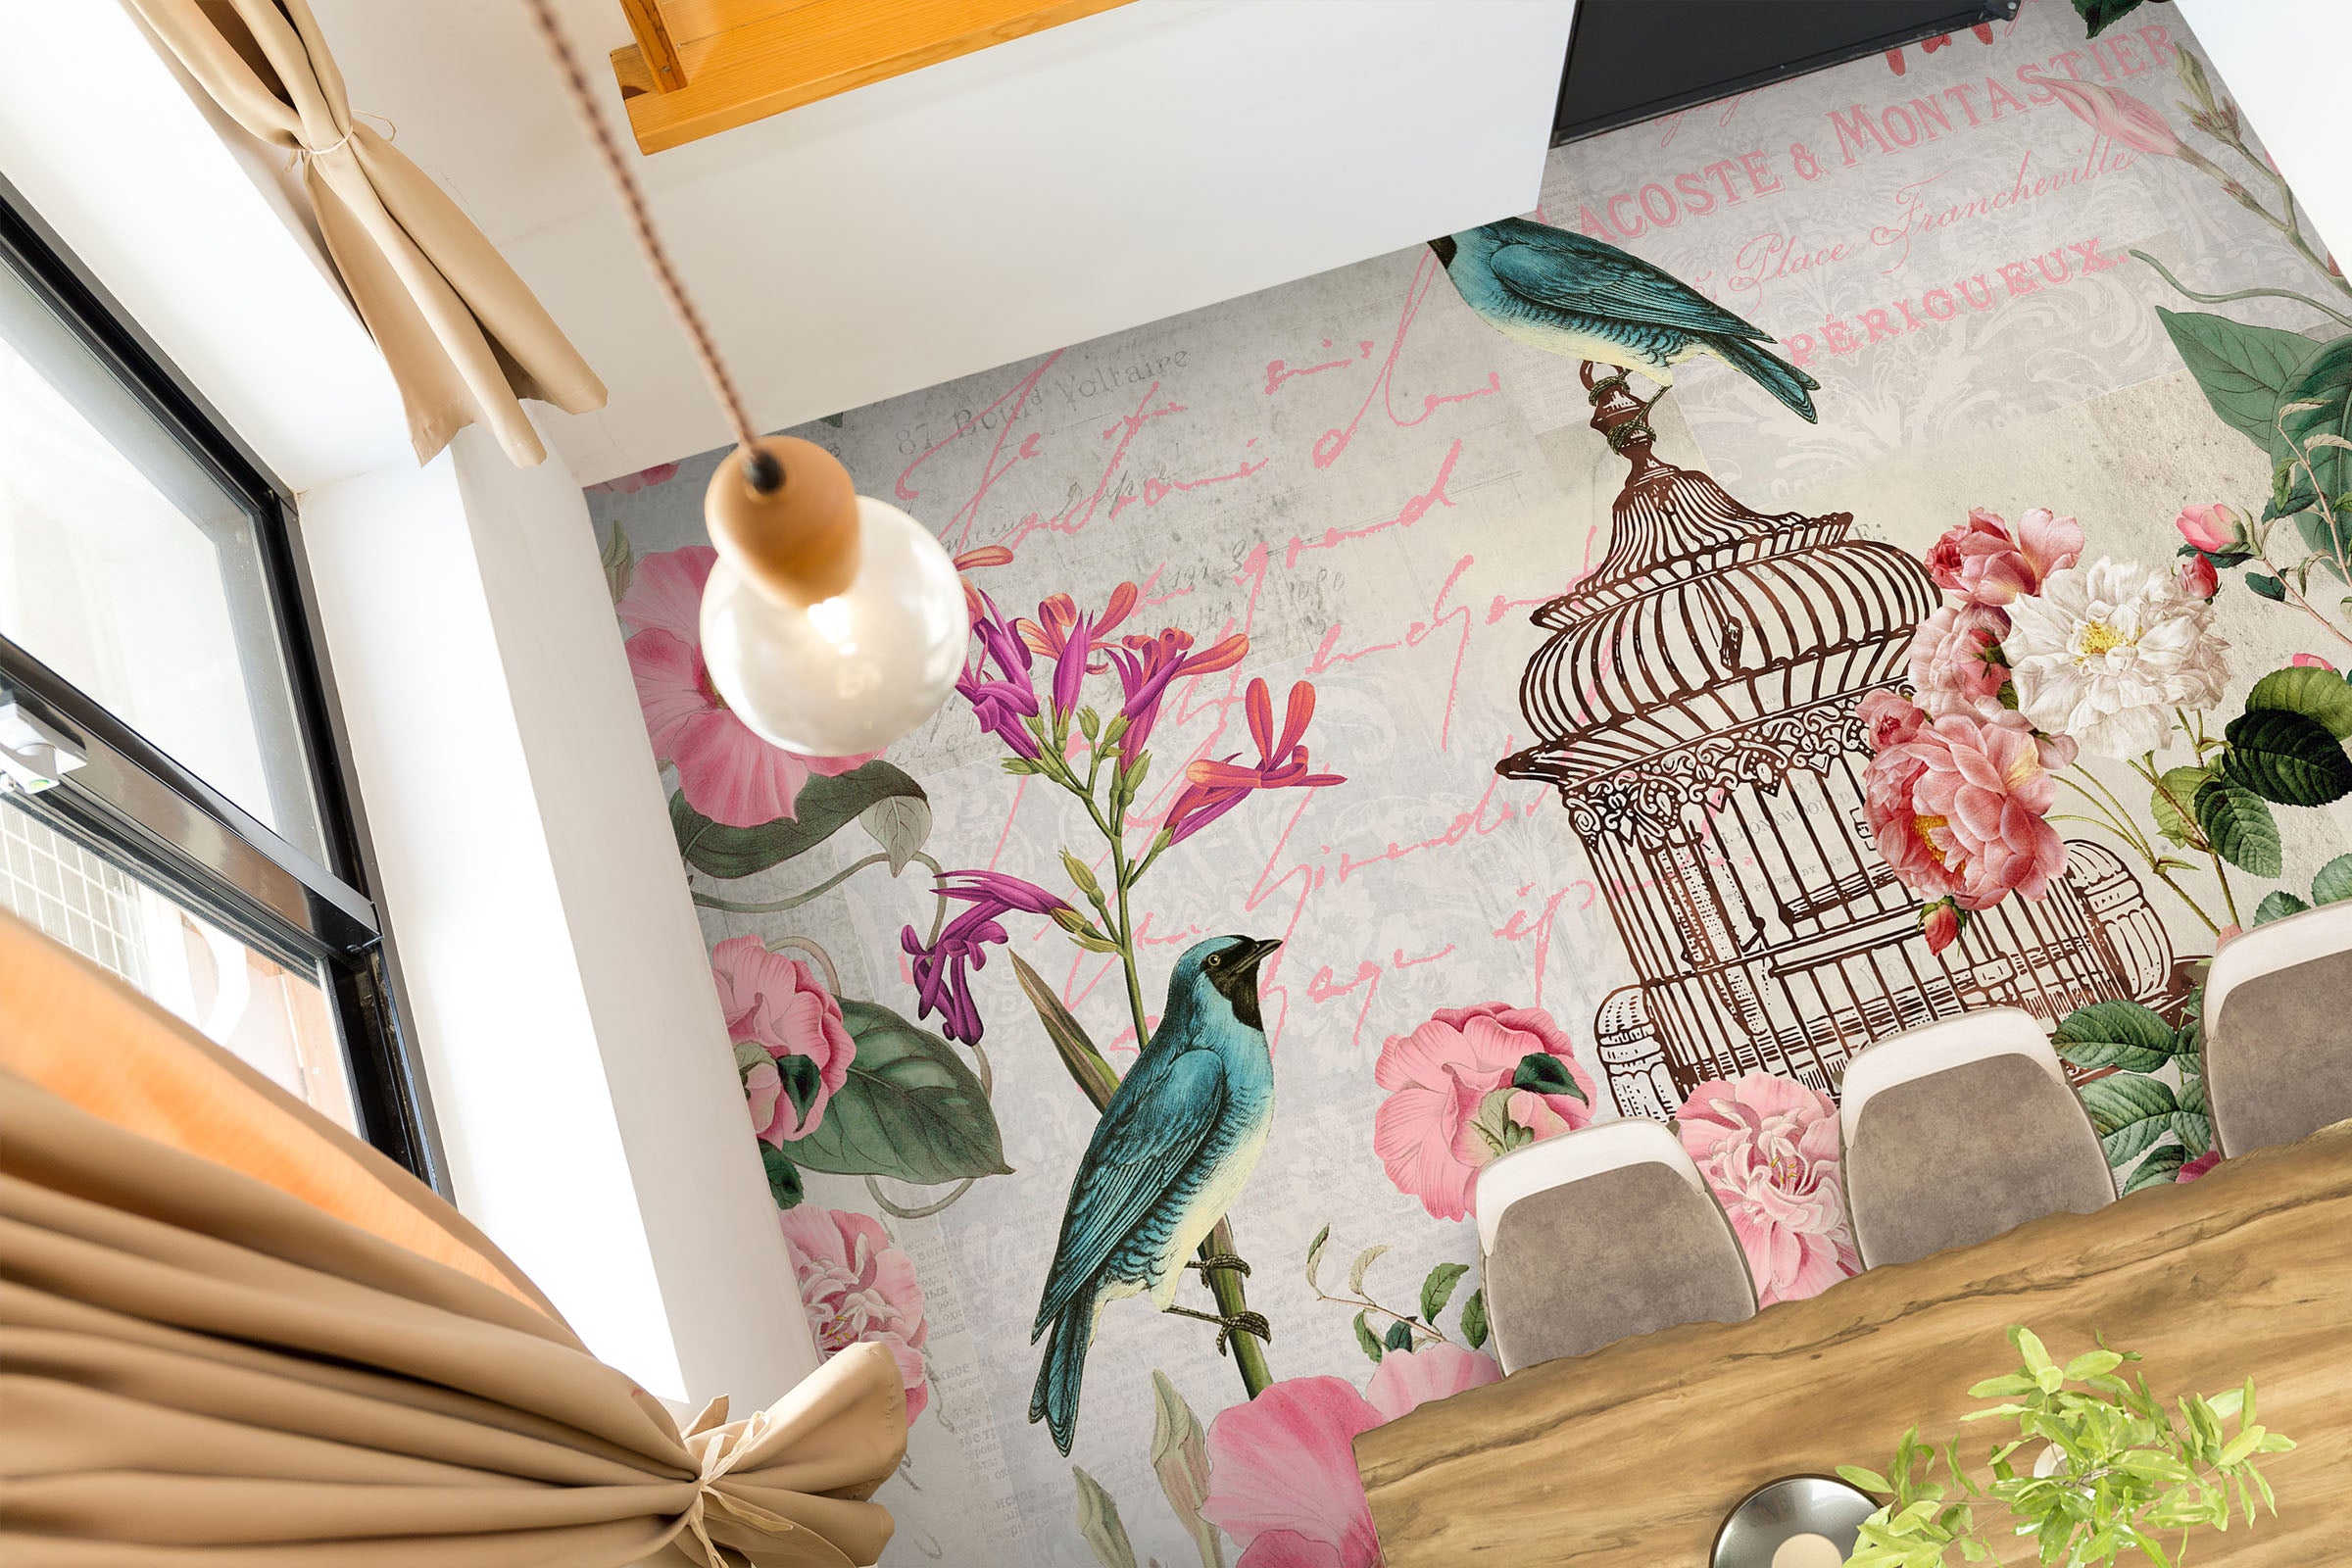 3D Flowers Birdcage 140132 Andrea Haase Floor Mural  Wallpaper Murals Self-Adhesive Removable Print Epoxy